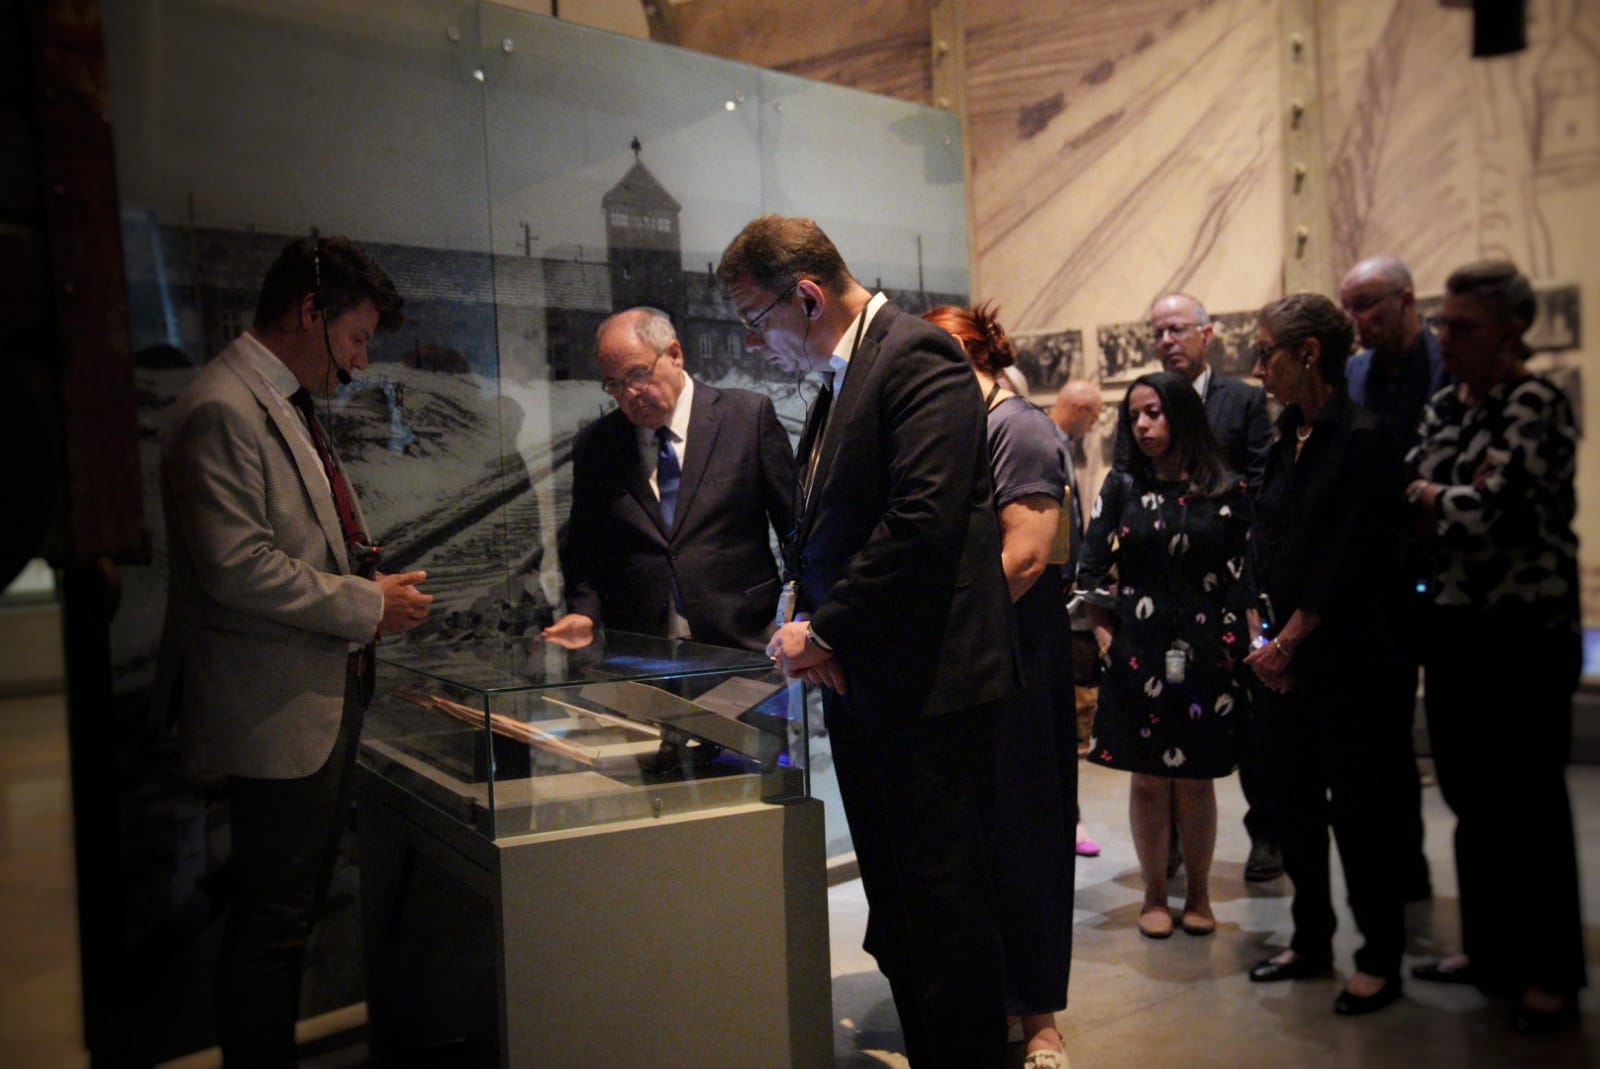 Dr. Albert Bourla views the Auschwitz Album on display in Yad Vashem's Holocaust History Museum